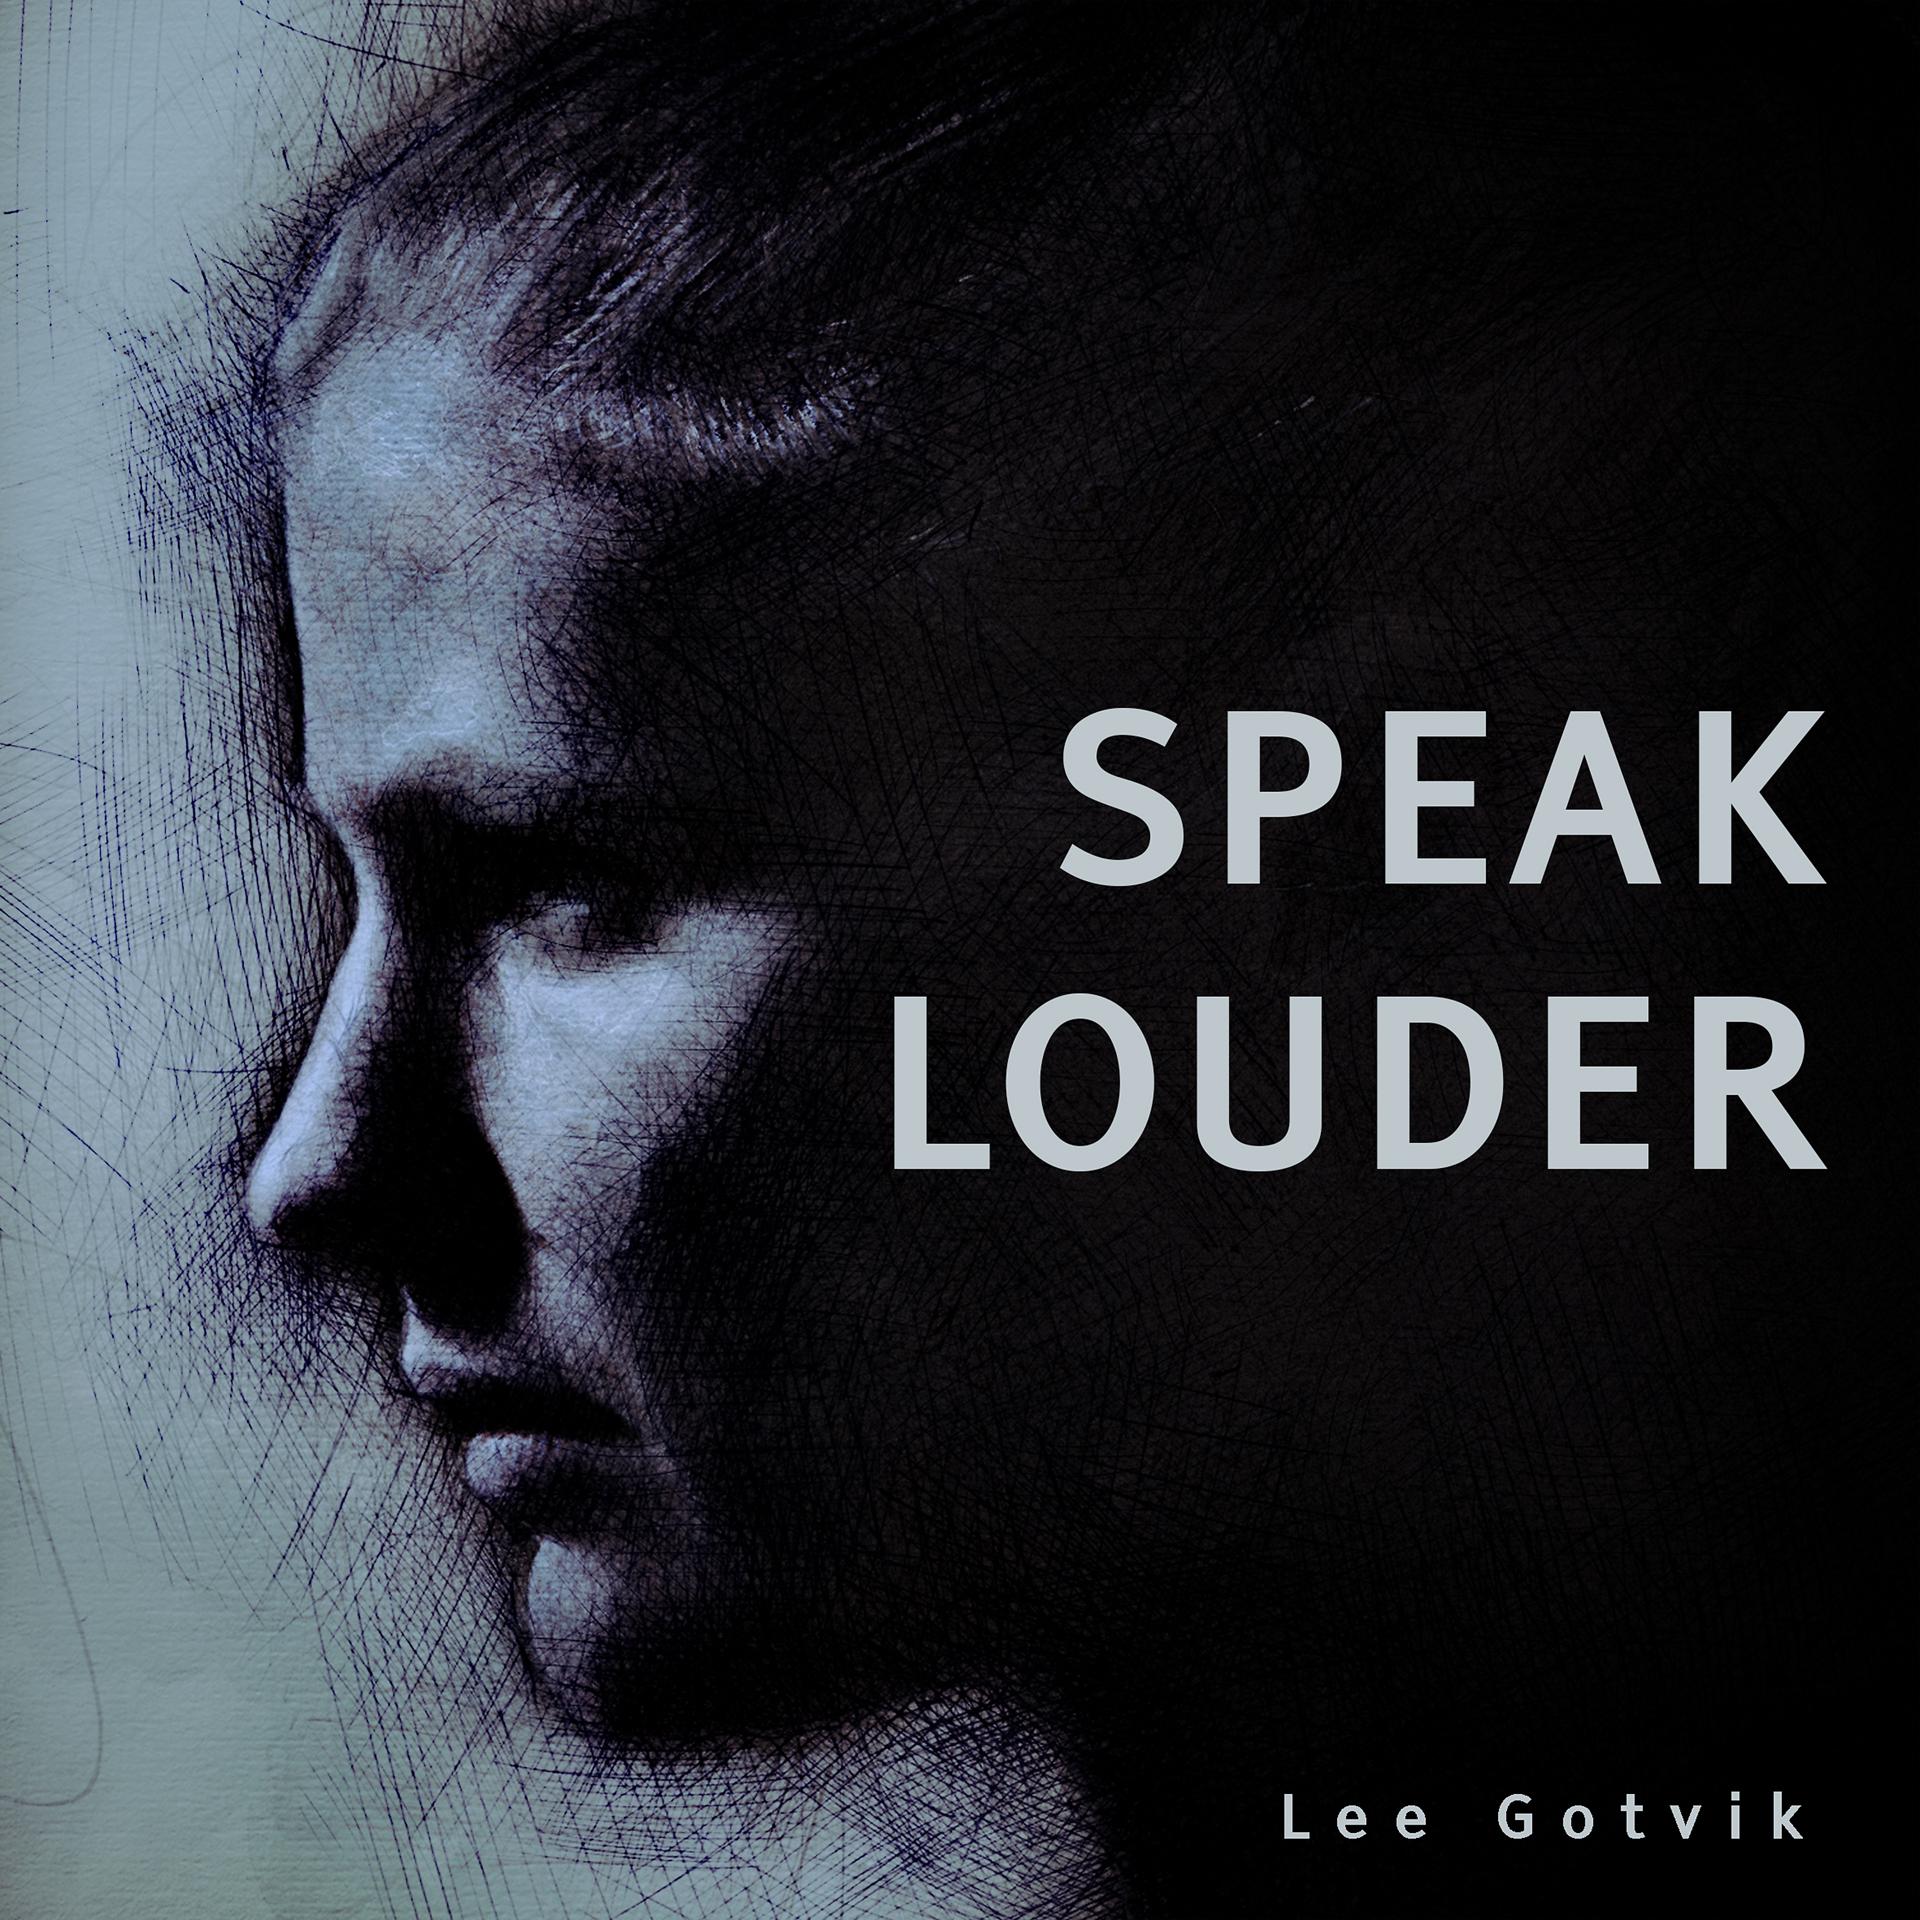 Could you speak loud